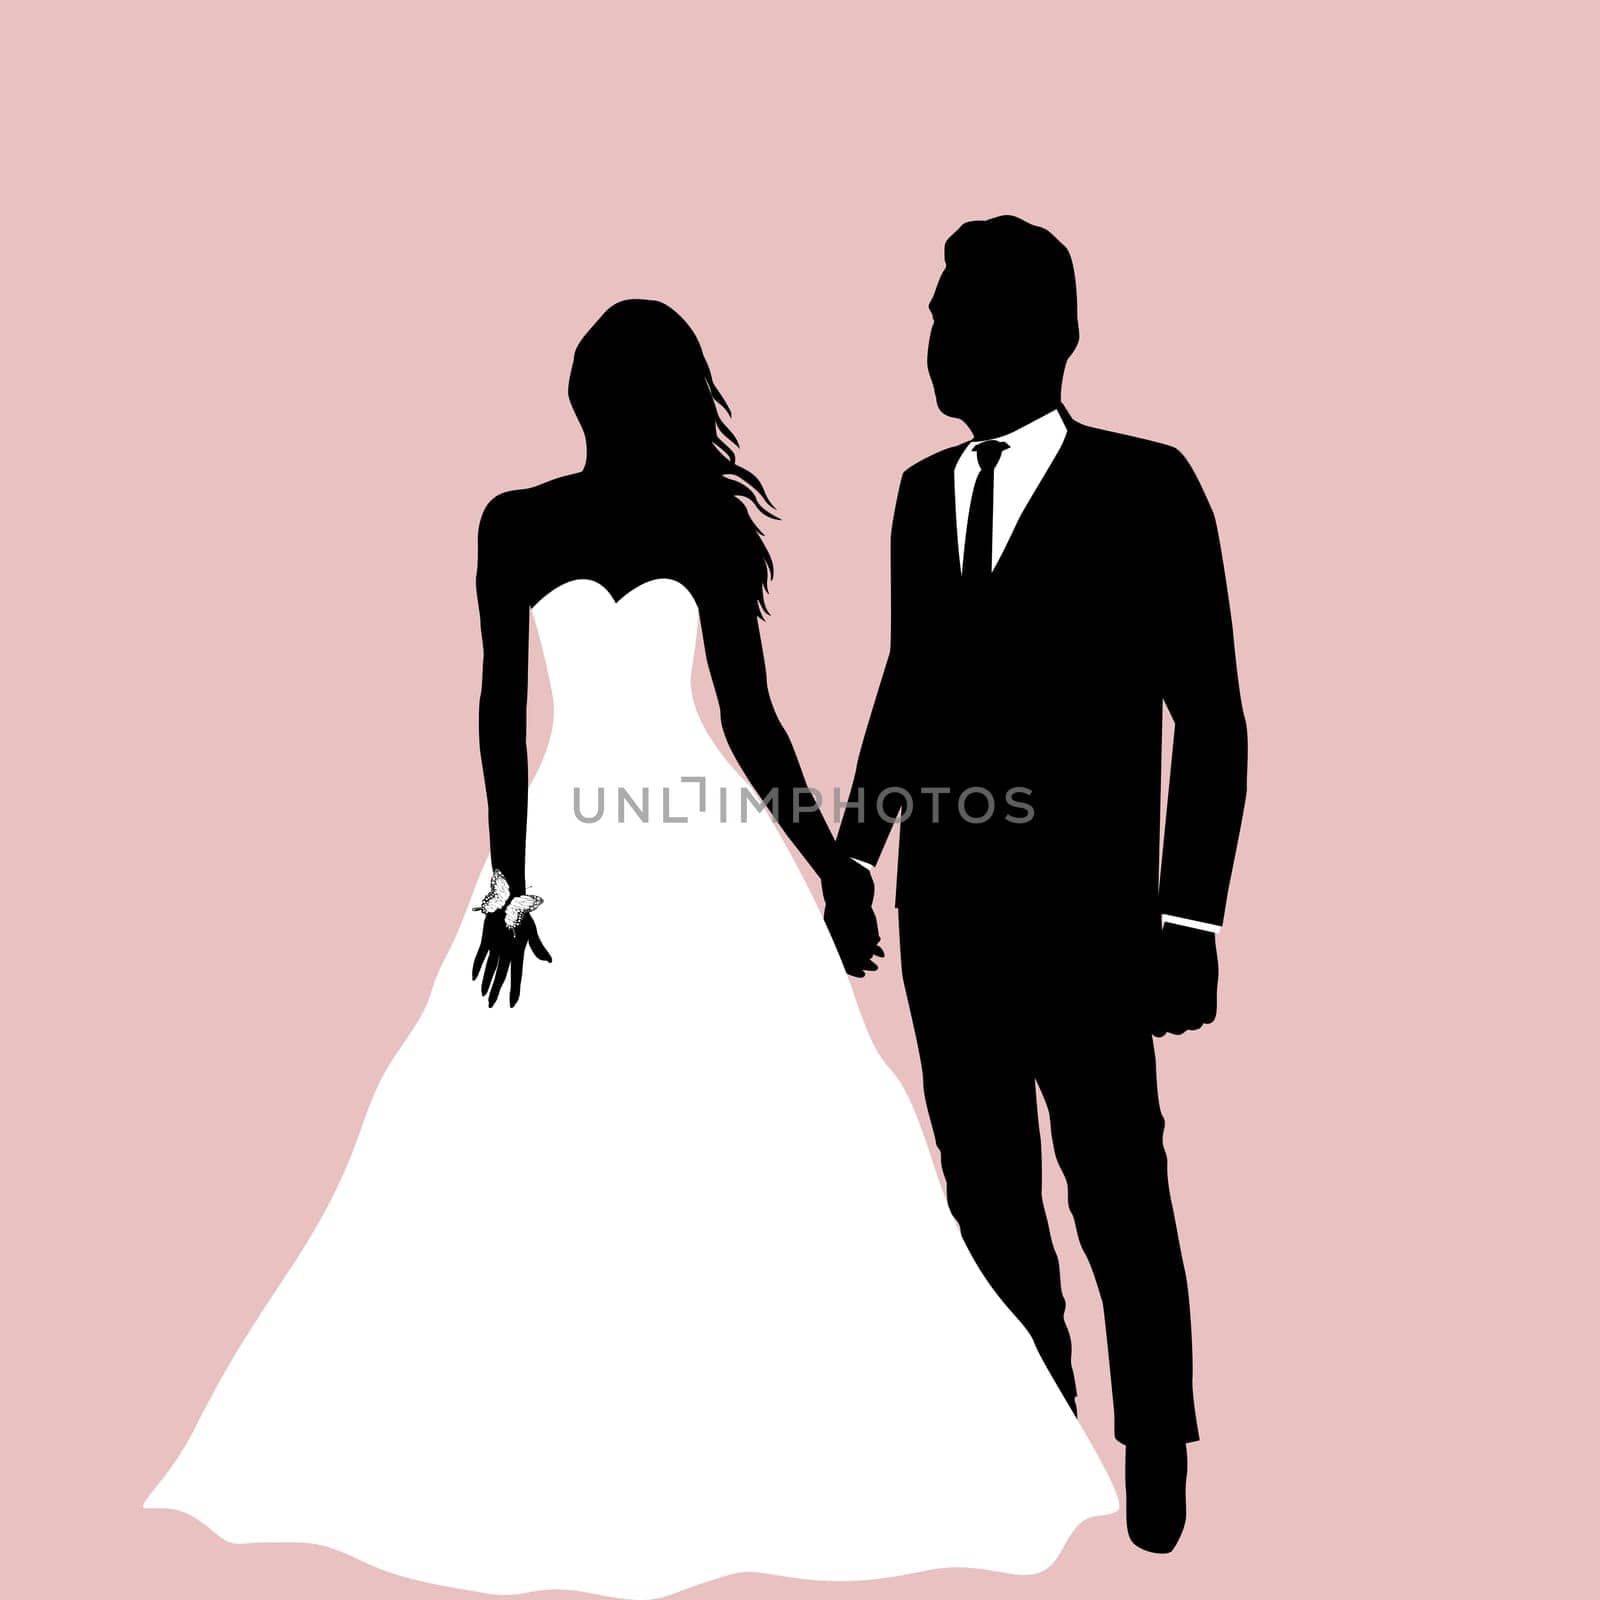 Wedding couple groom and bride, invitation card by hibrida13